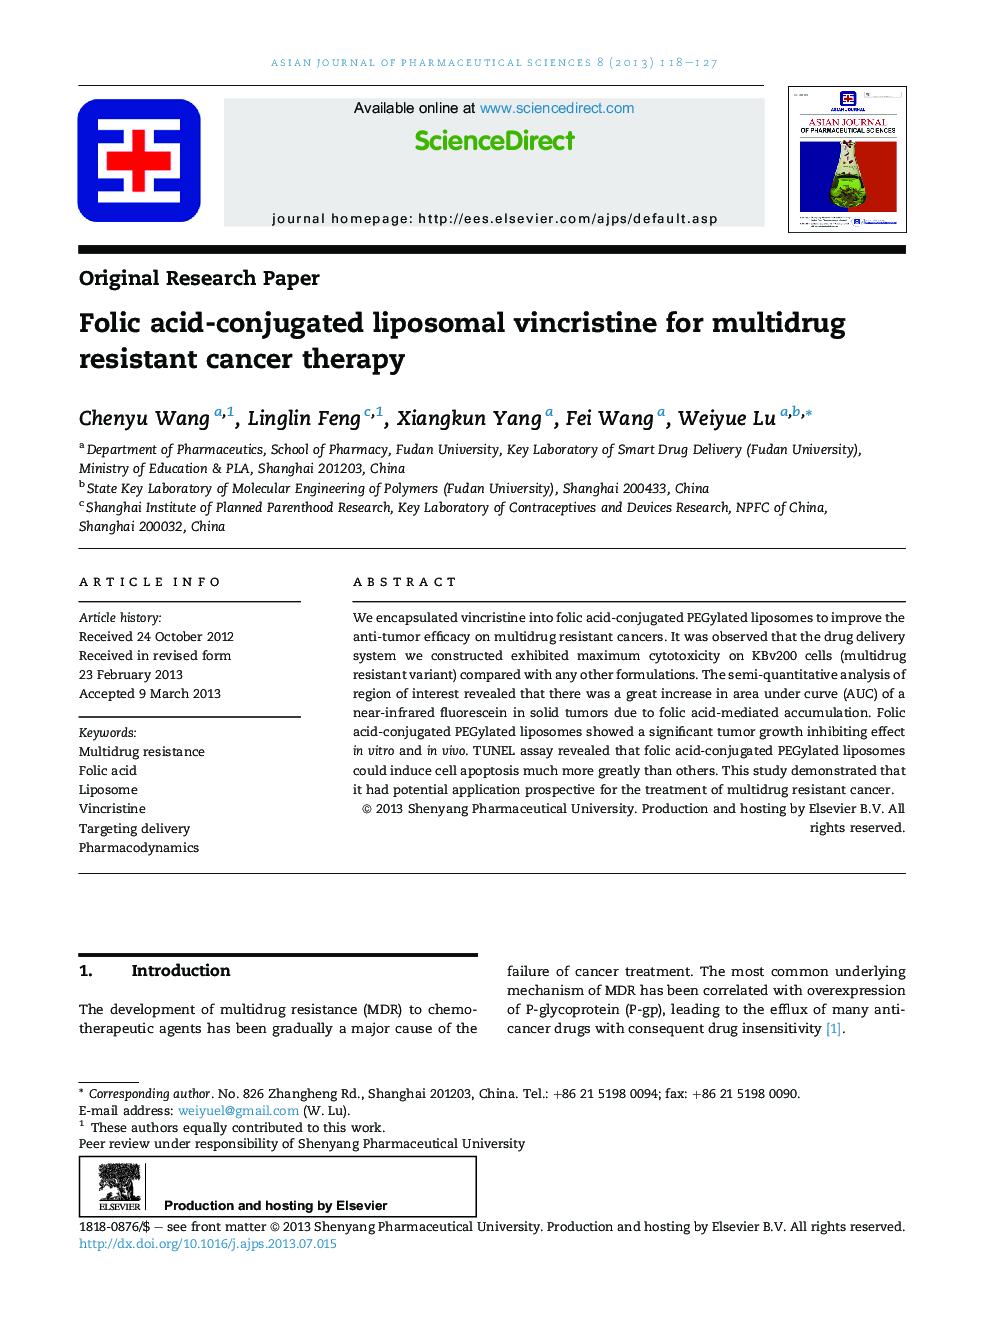 Folic acid-conjugated liposomal vincristine for multidrug resistant cancer therapy 